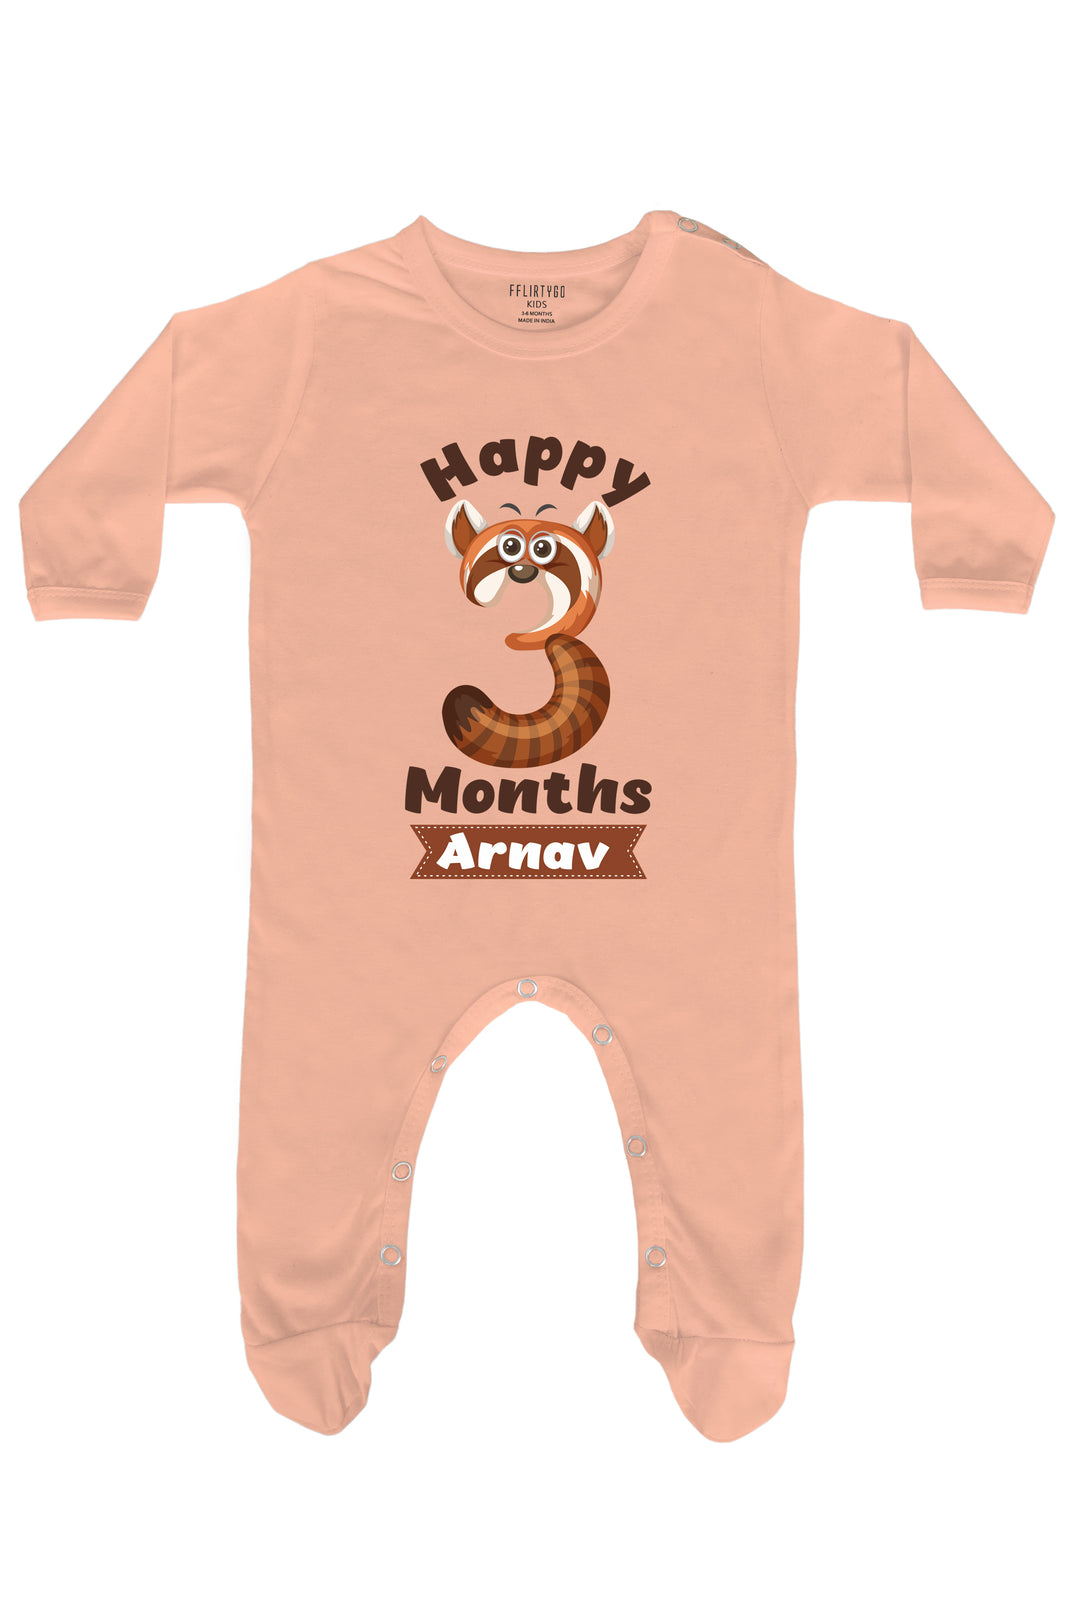 Three Month Milestone Baby Romper | Onesies w/ Custom Name